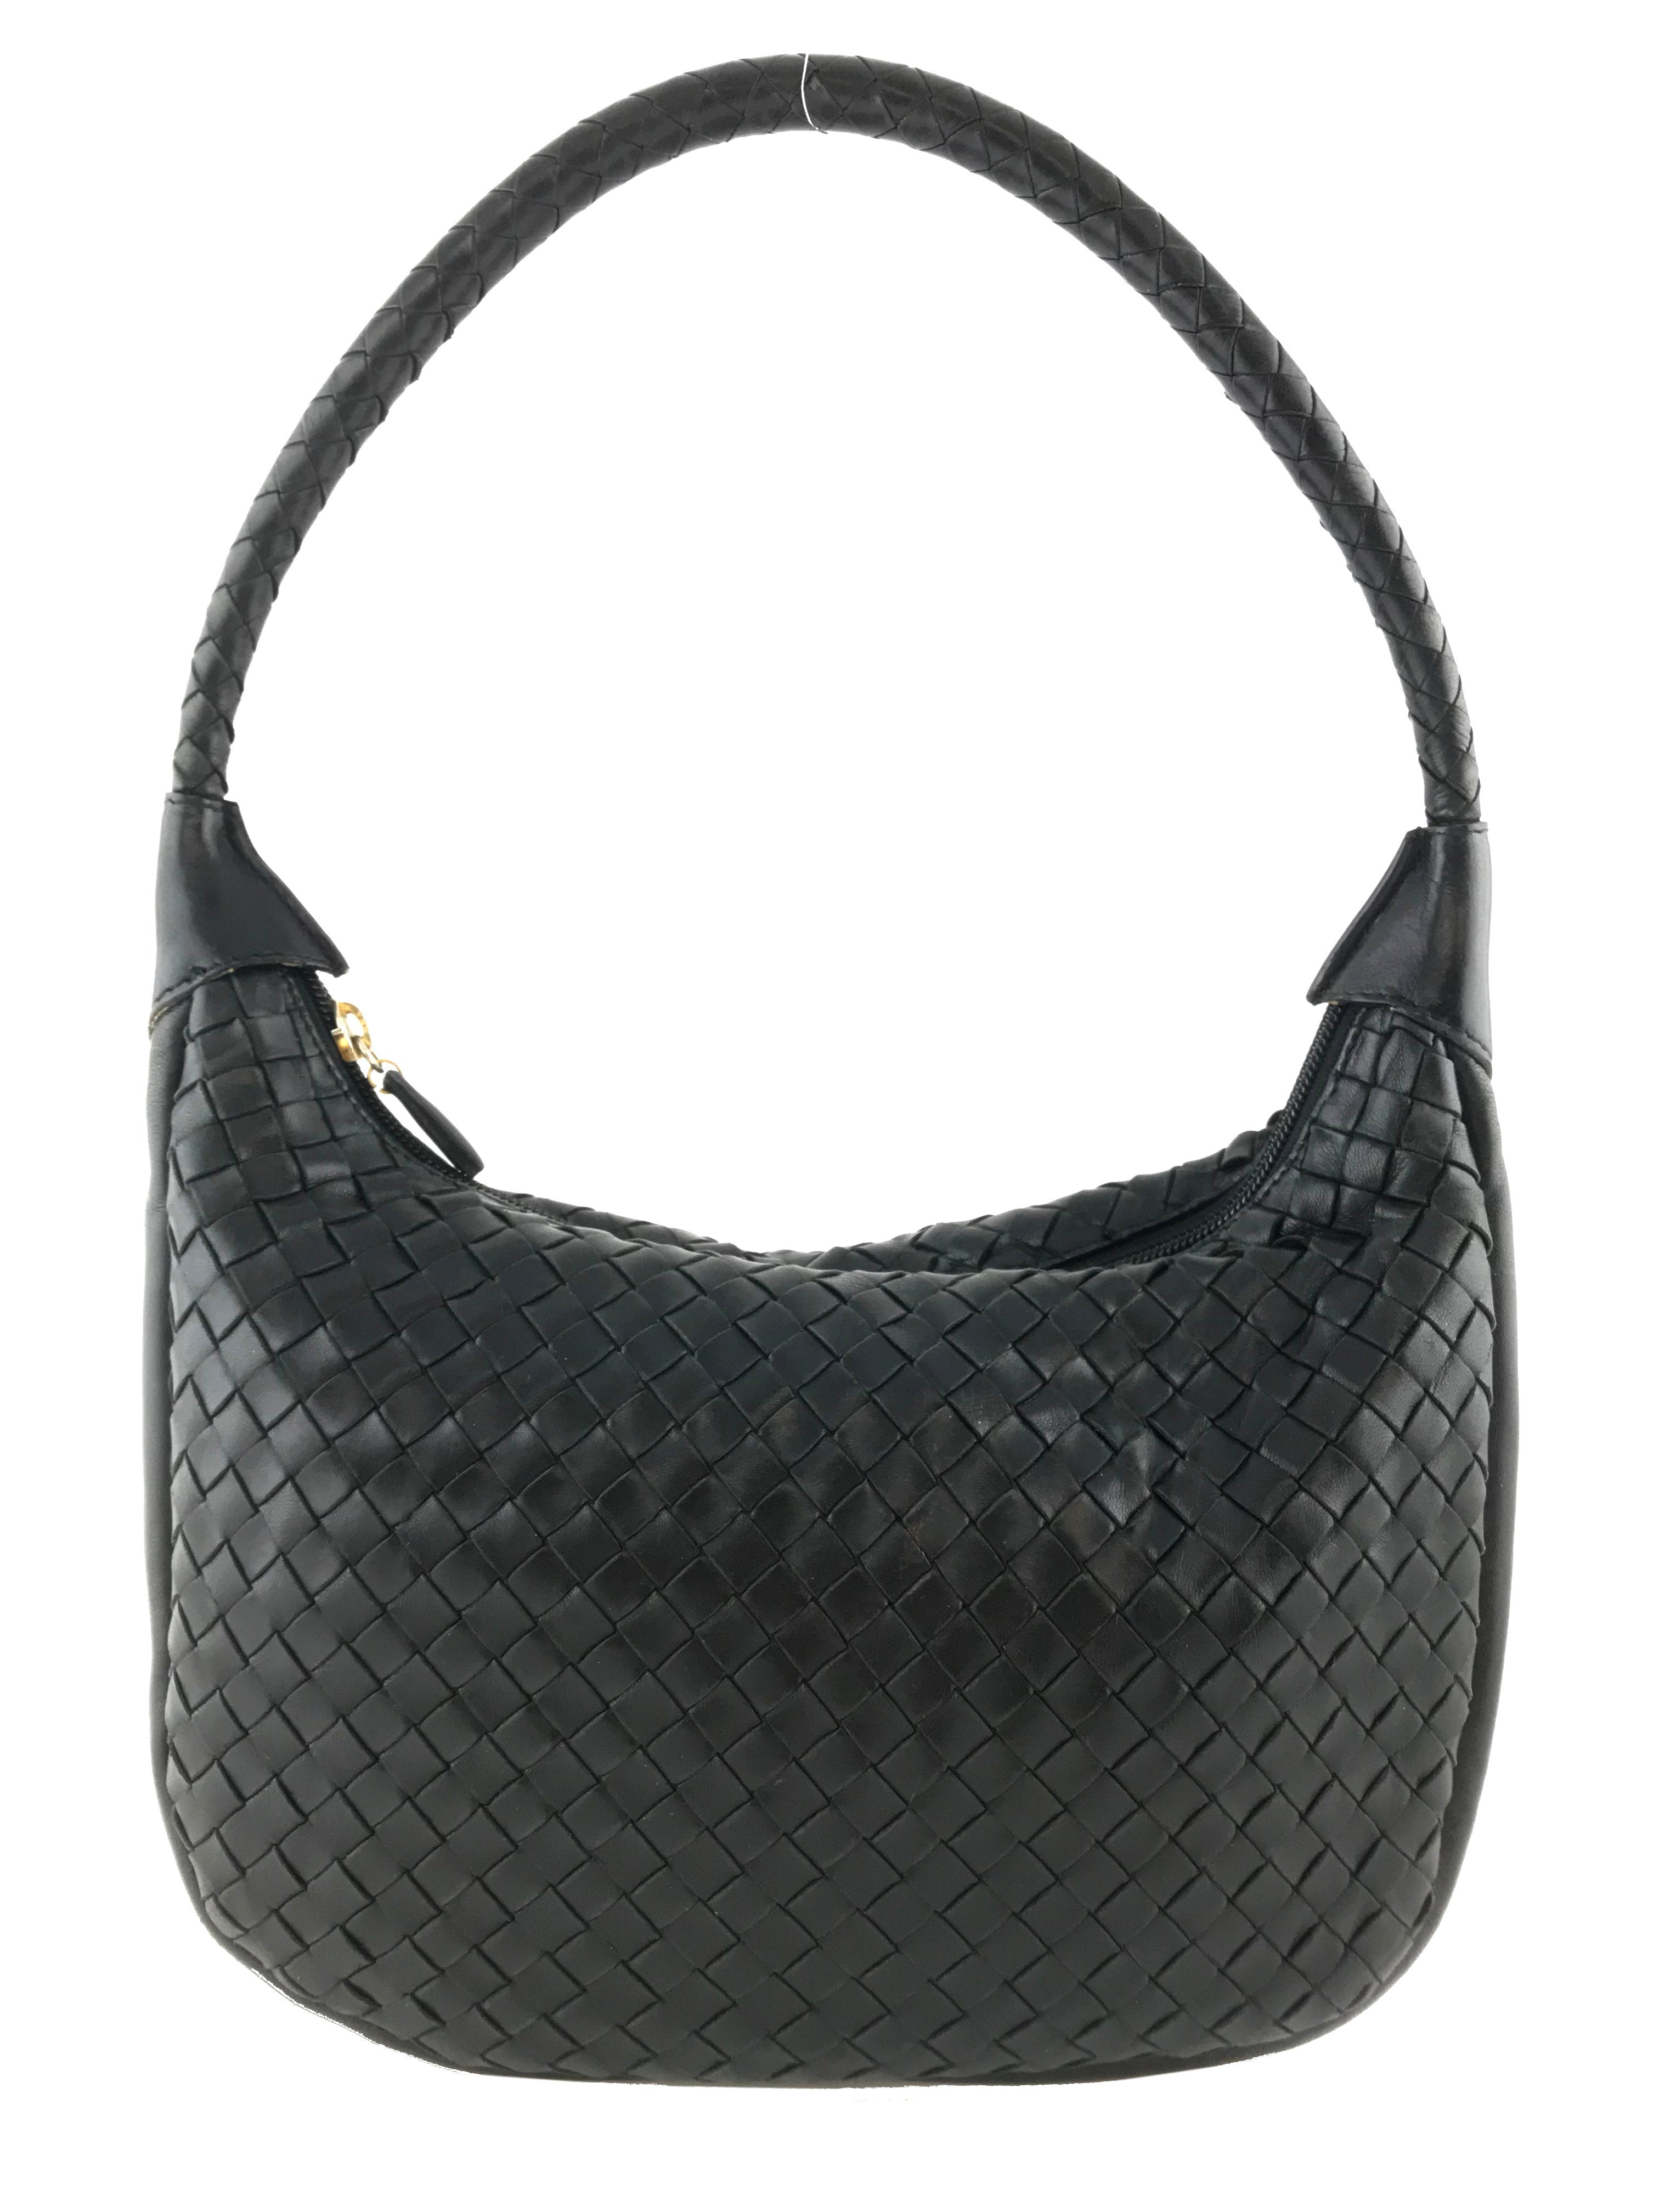 Bottega Veneta Vintage Intrecciato Leather Hobo Bag - Consigned Designs